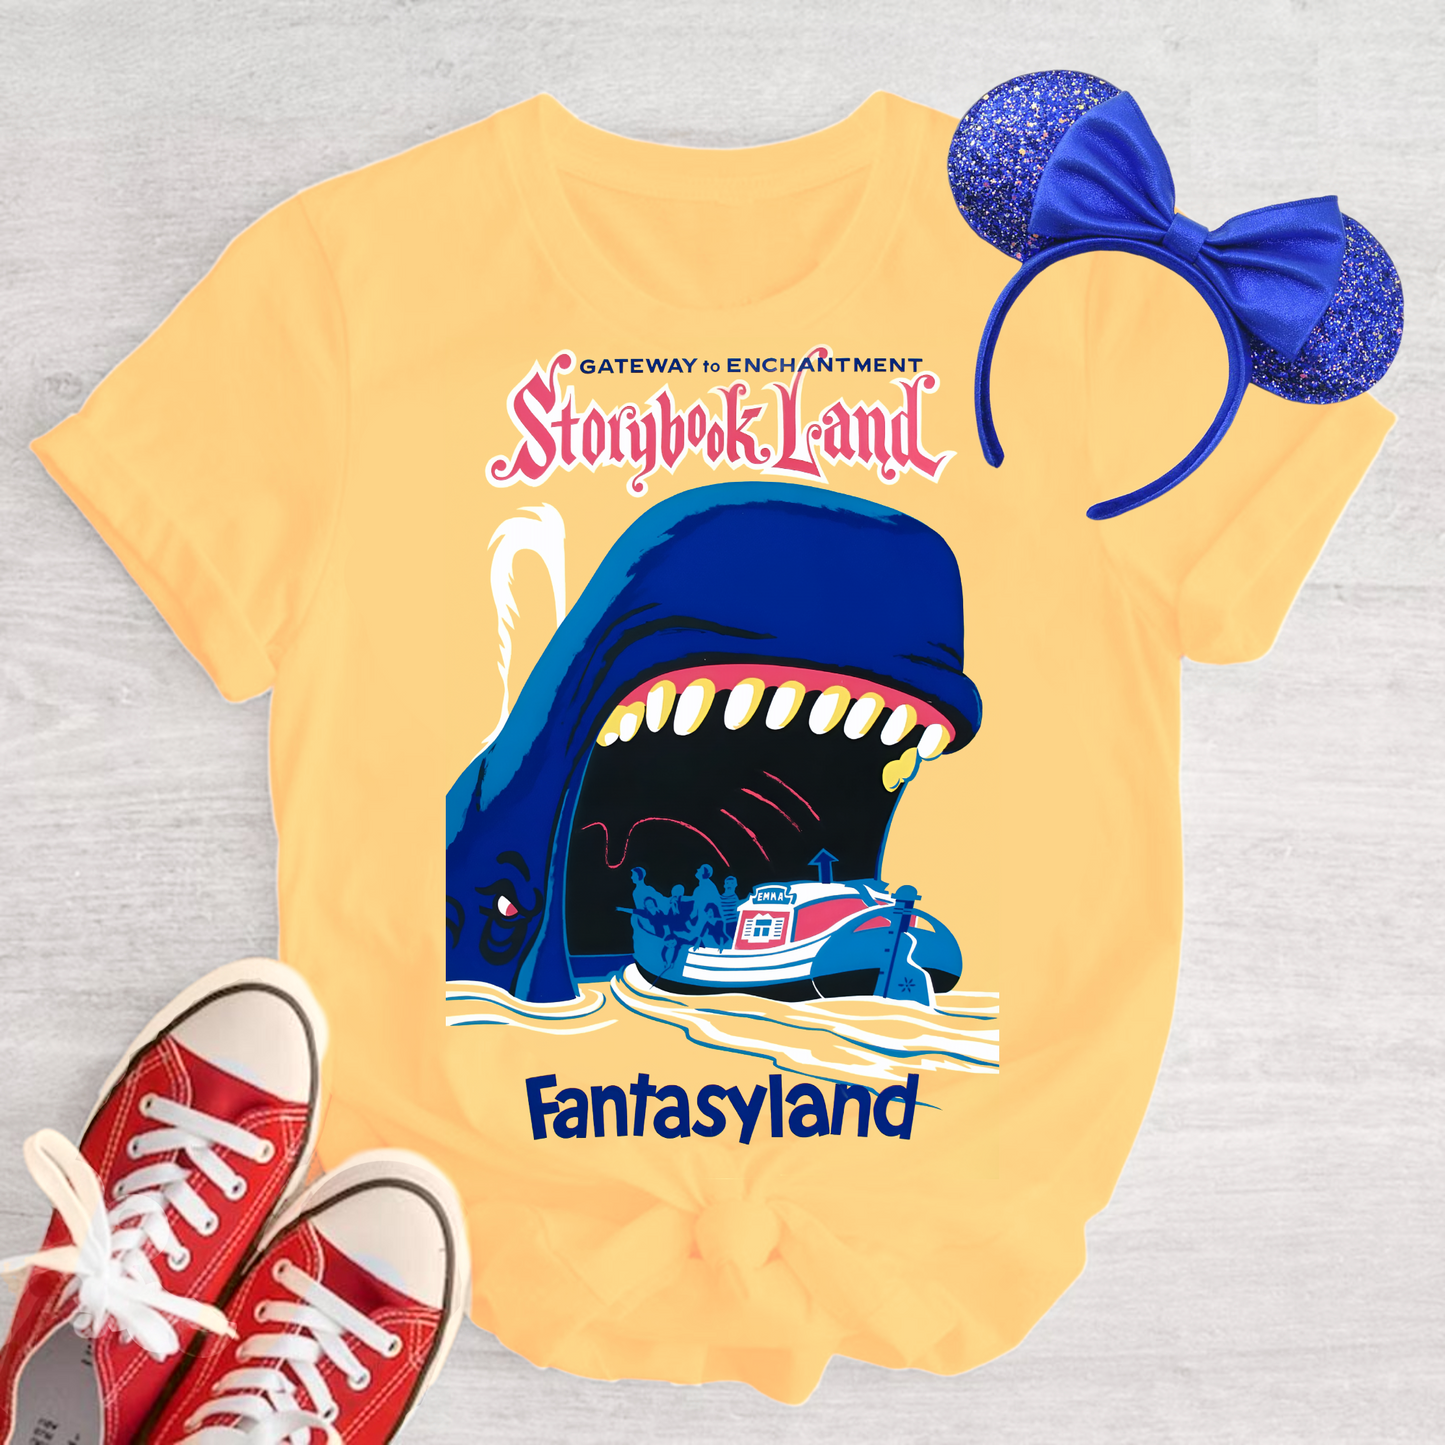 Storybook Land Fantasyland shirt, Women's Oversized Unisex Tee, Comfort Color Disney Shirt